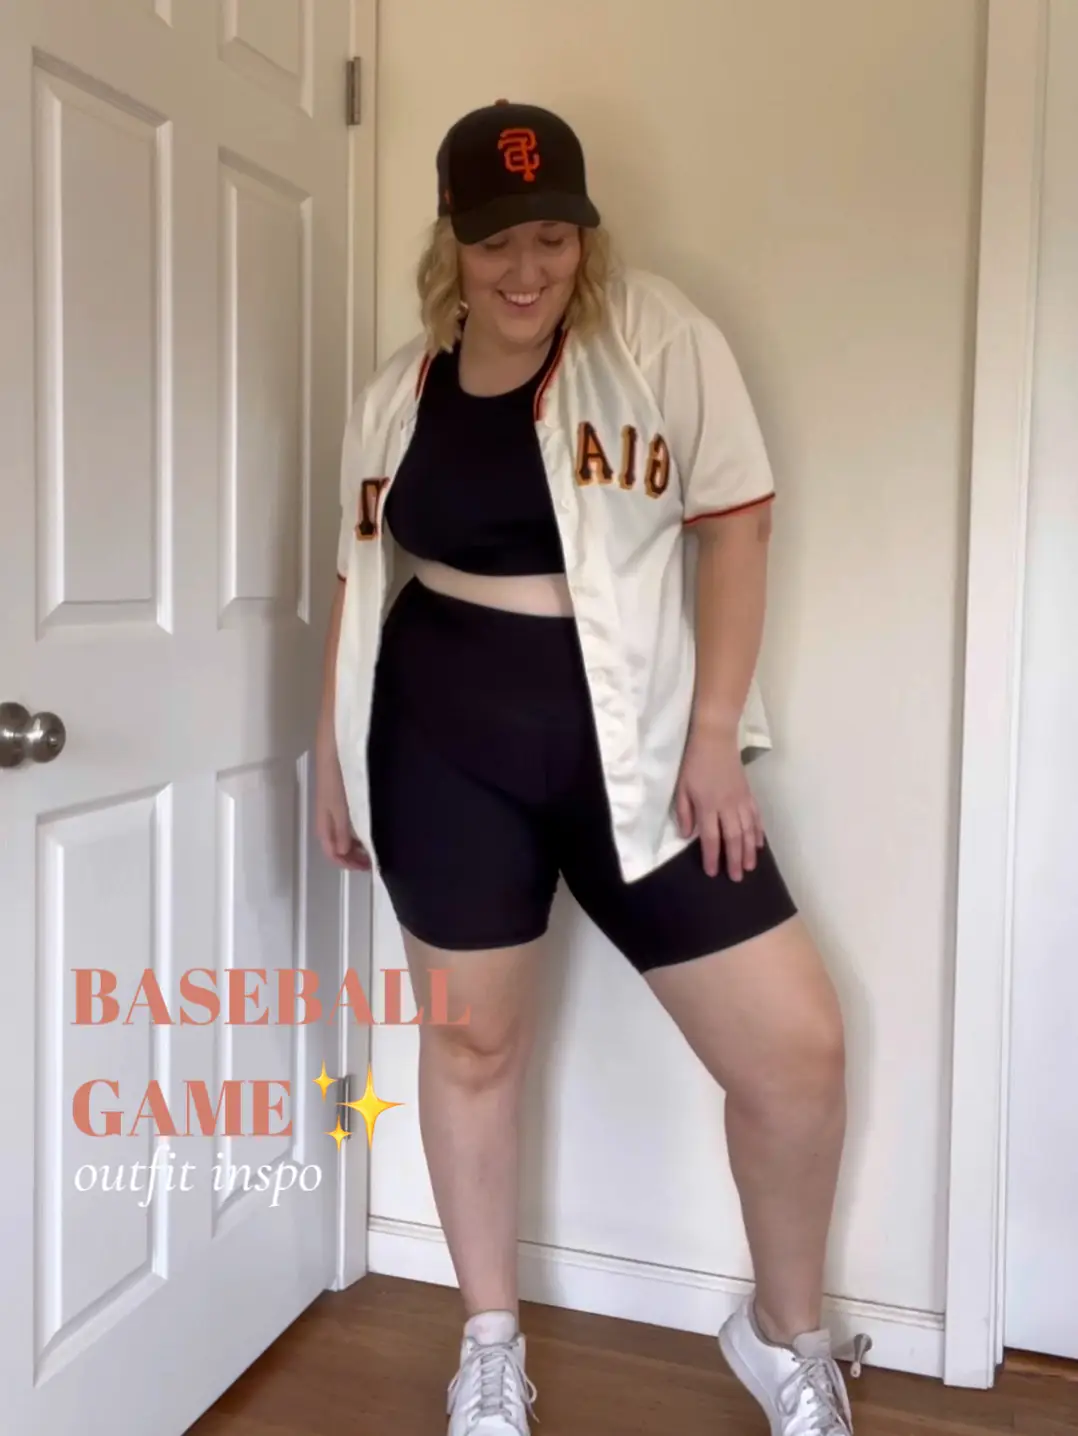 giants baseball game outfit - Lemon8 Search